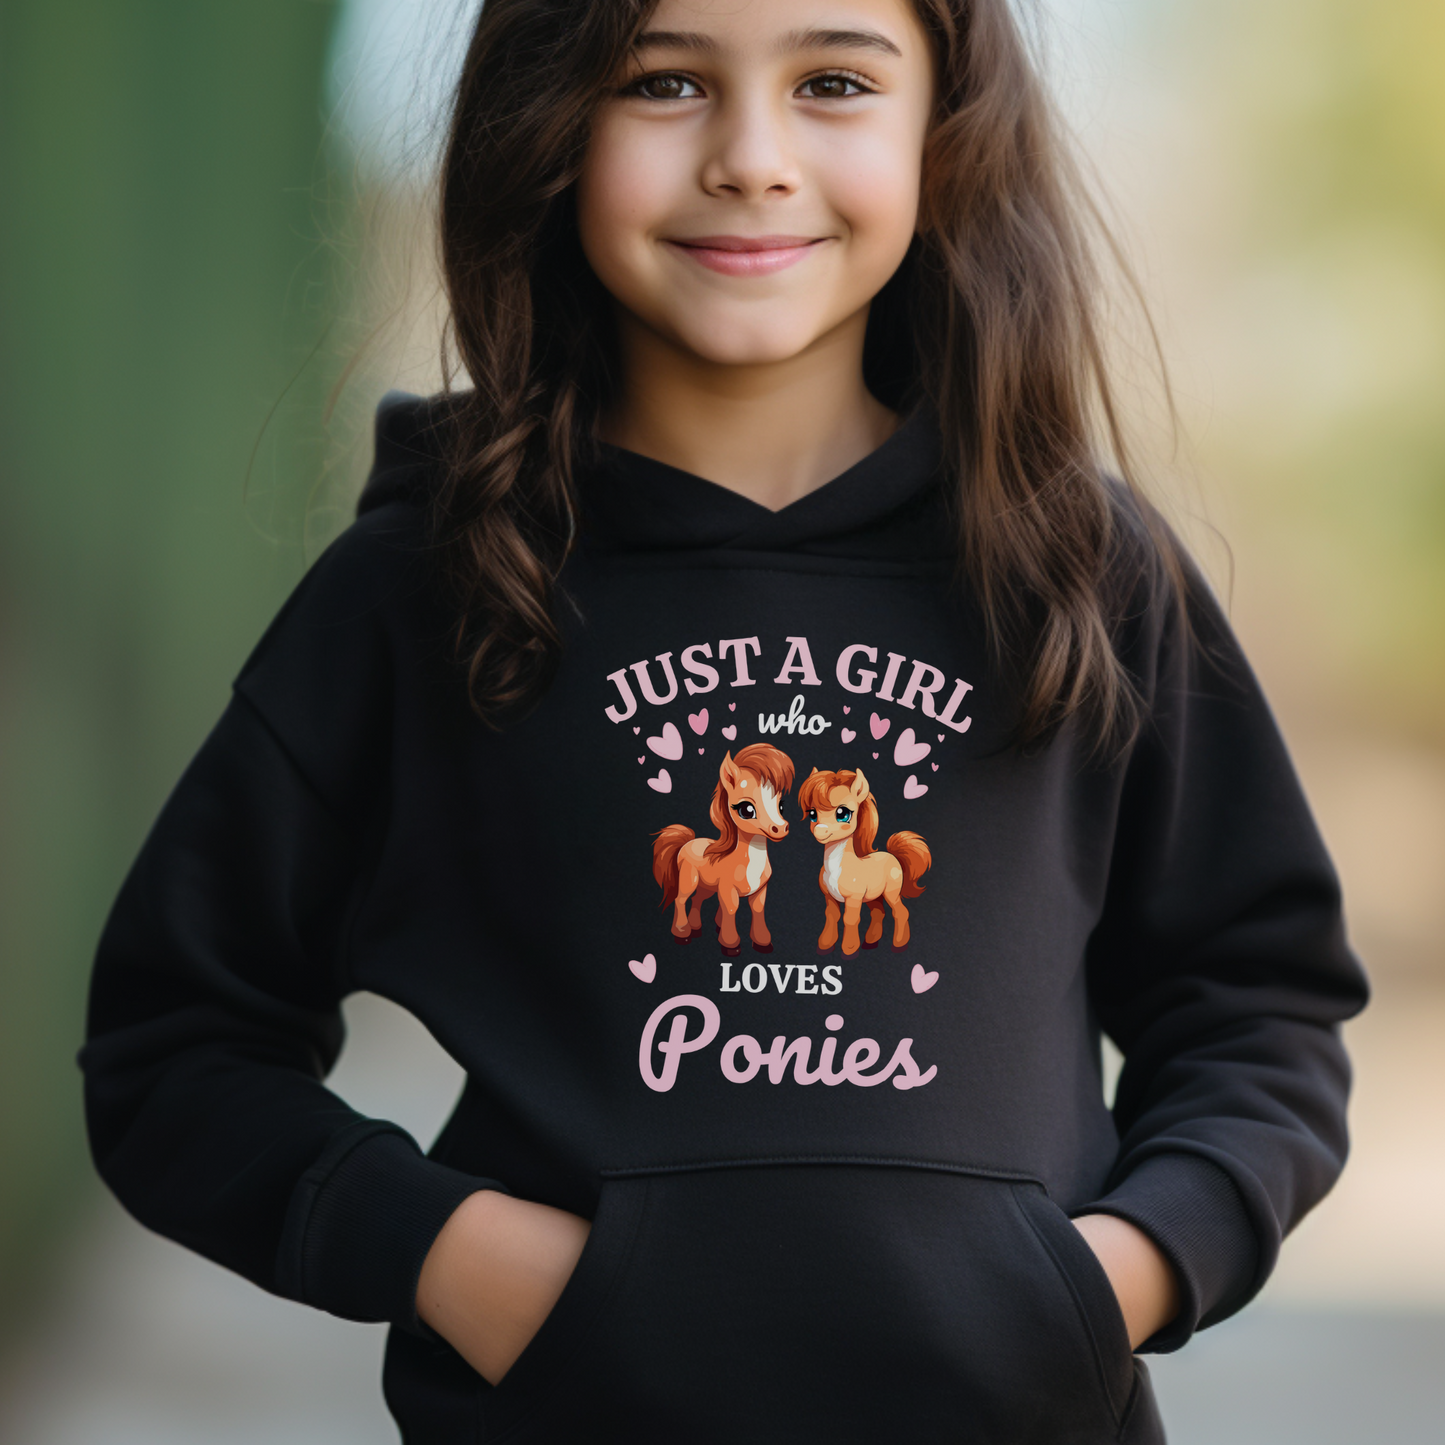 Just a Girl who loves Ponies/Horses - Girls Hoodie